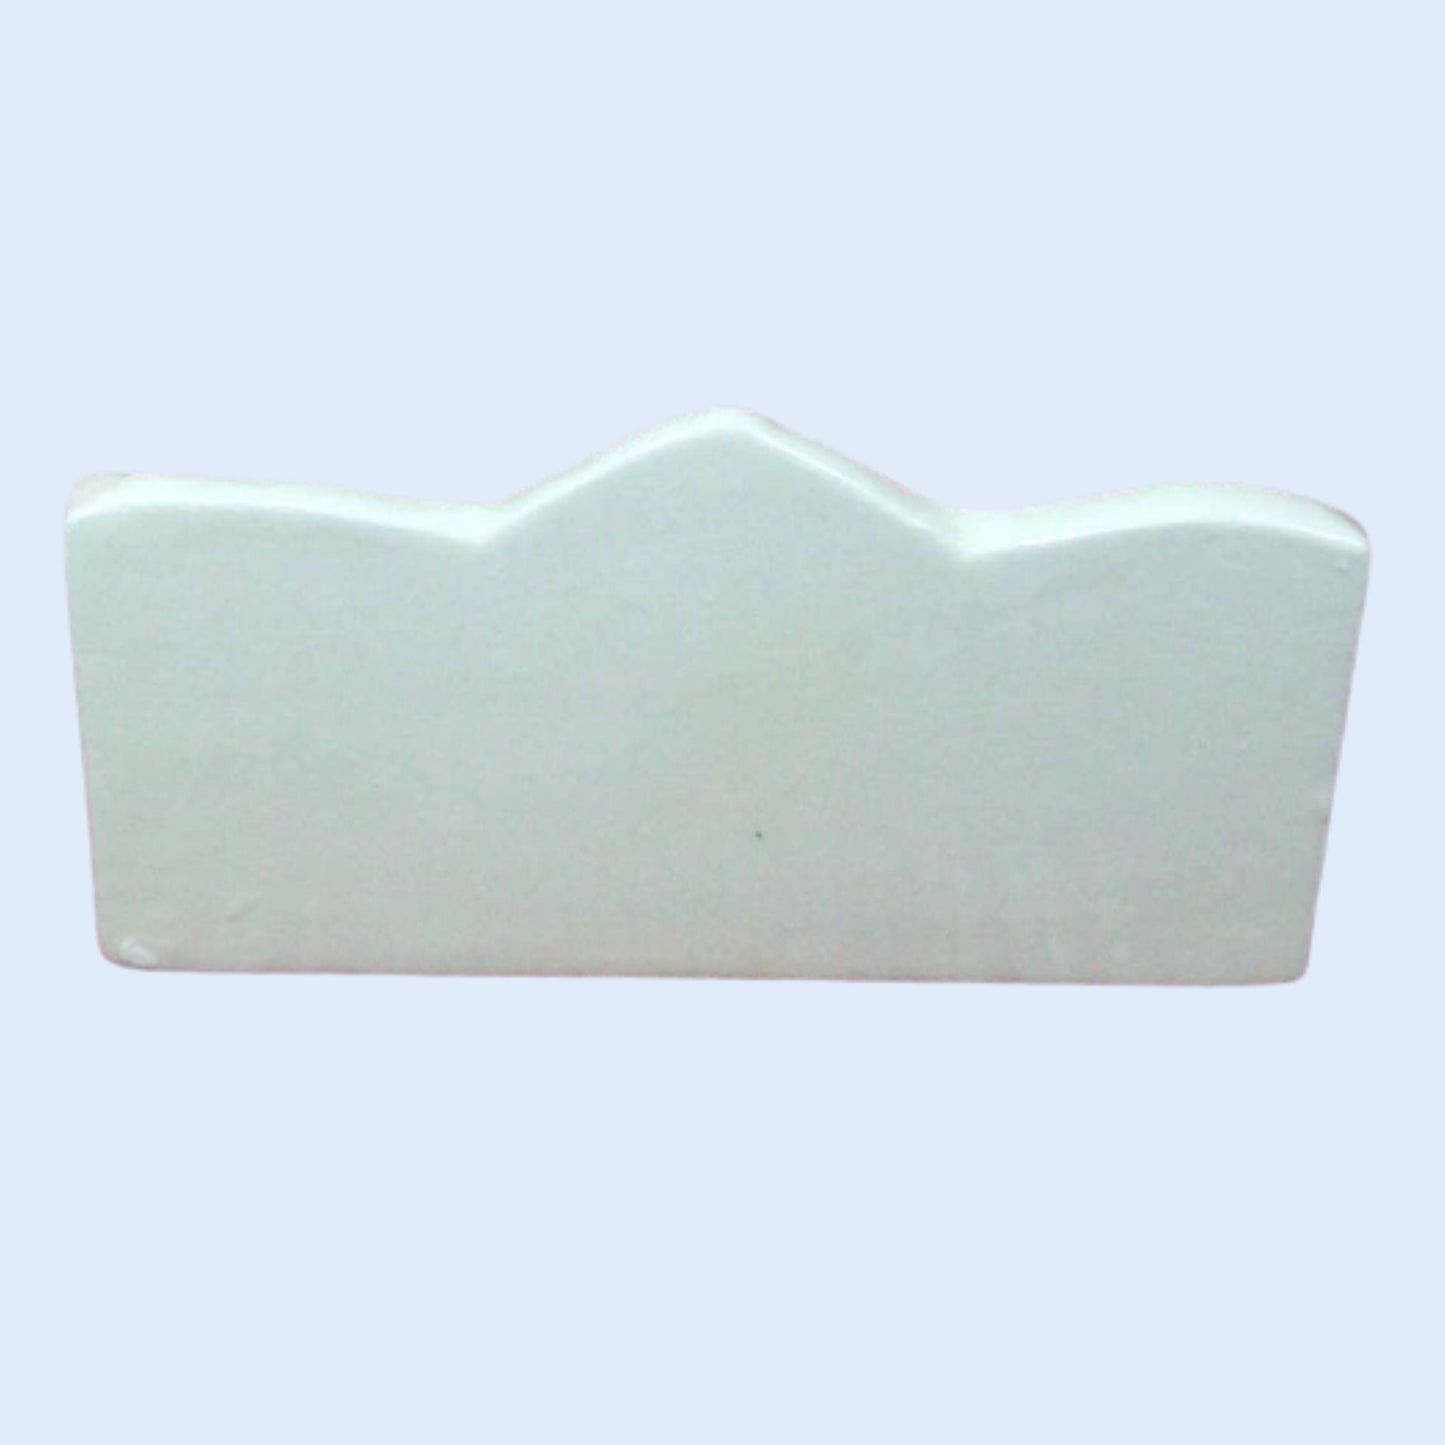 Back side of white glossy ceramic business card holder